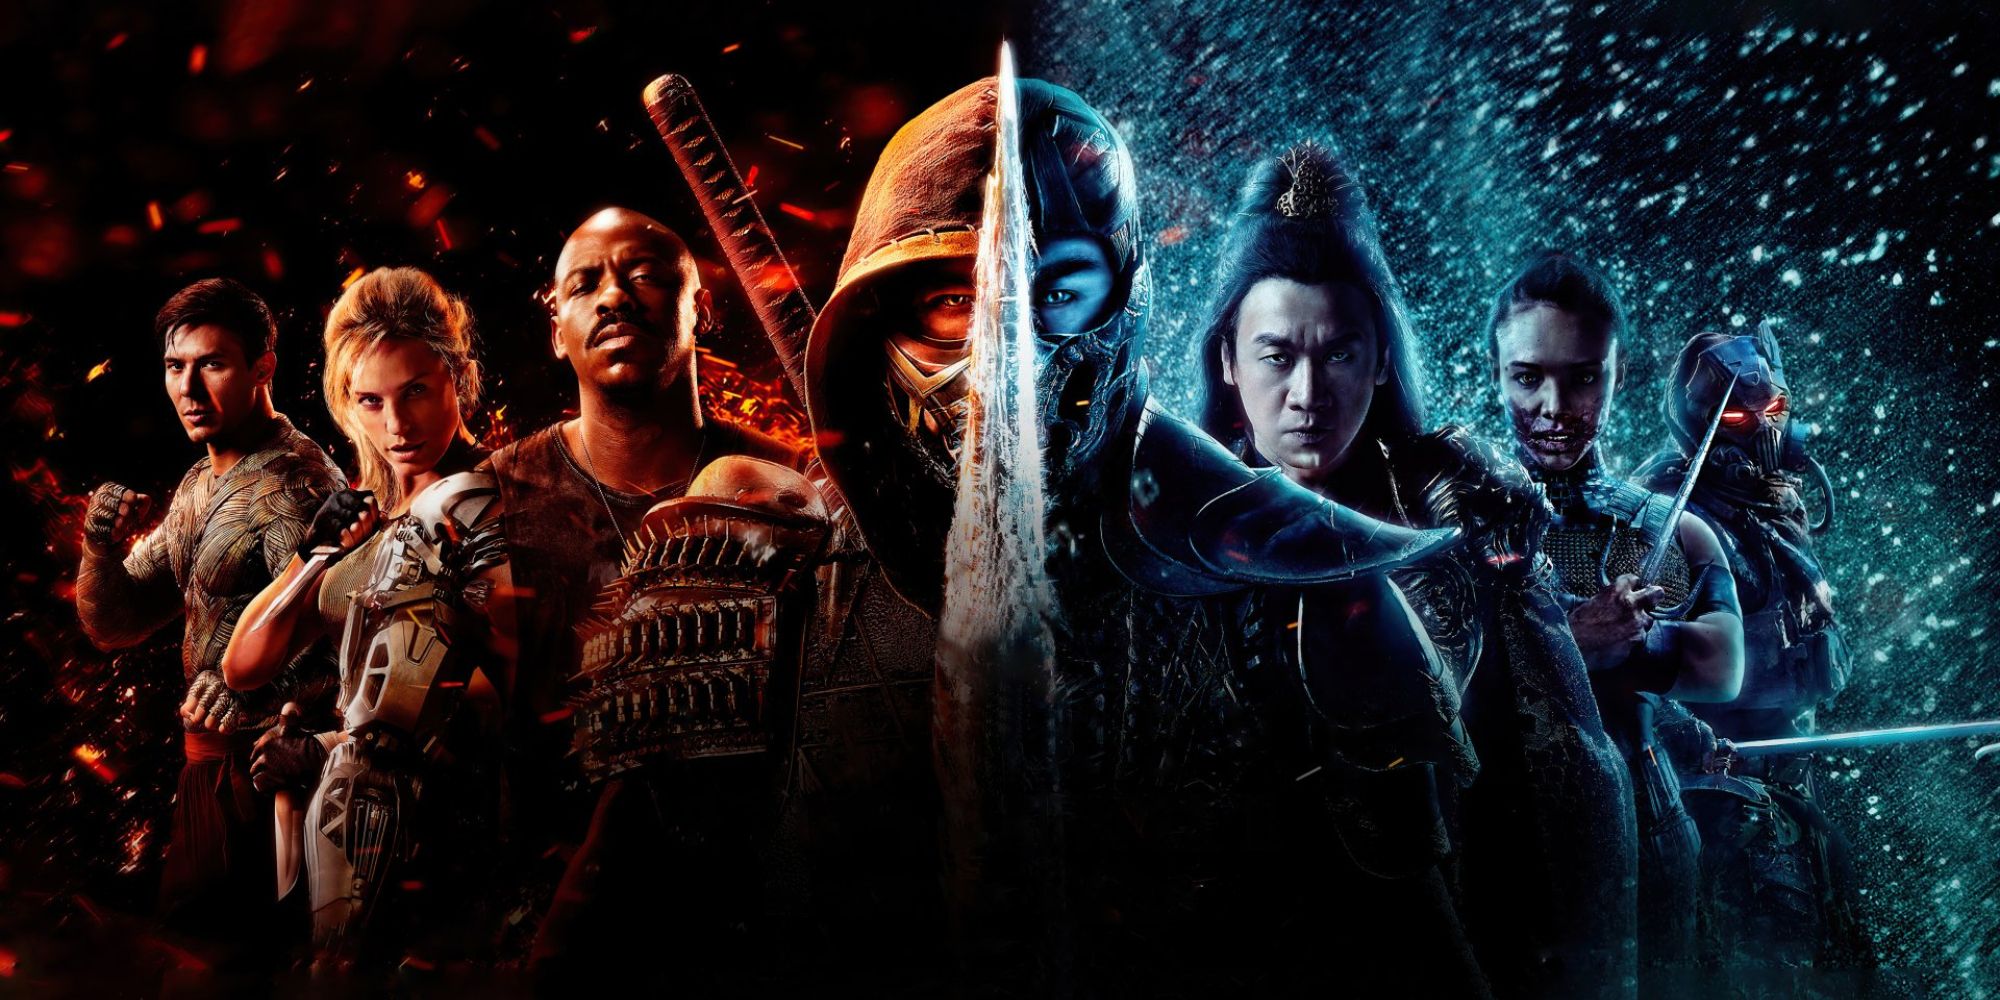 Several characters from Mortal Kombat